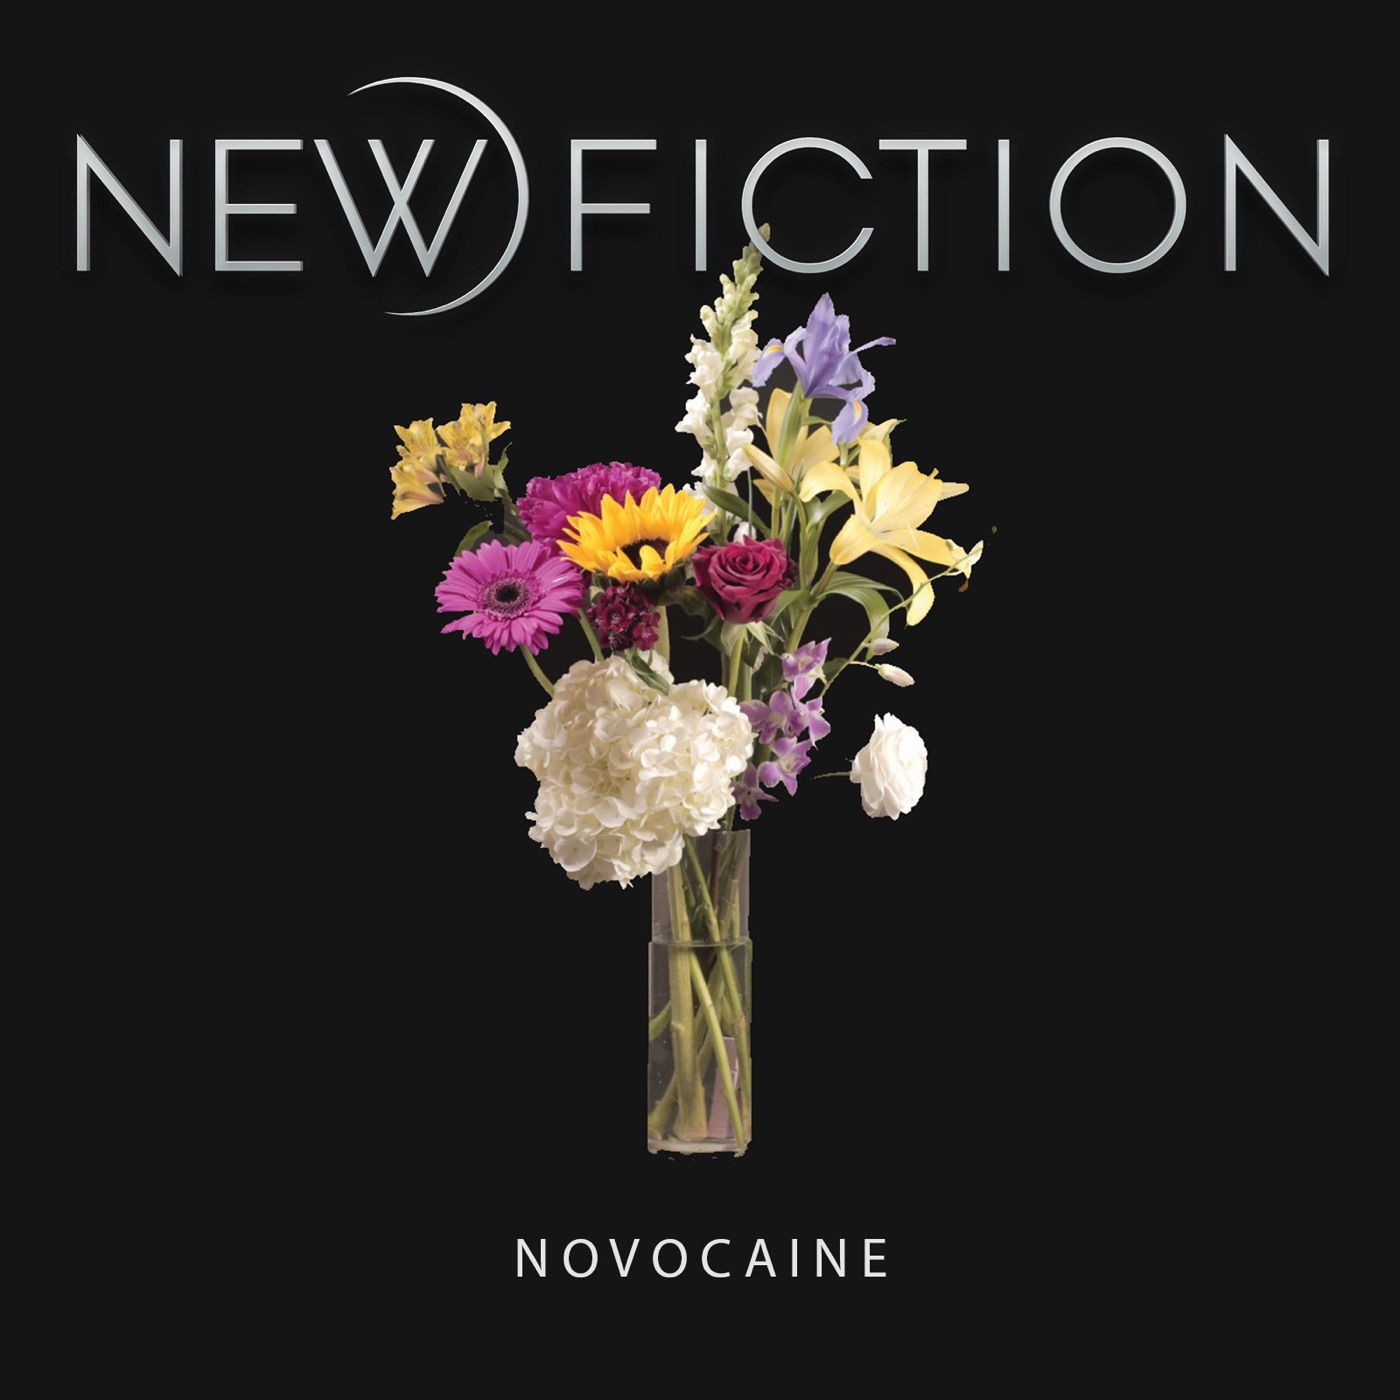 New Fiction - Novocaine [single] (2018)